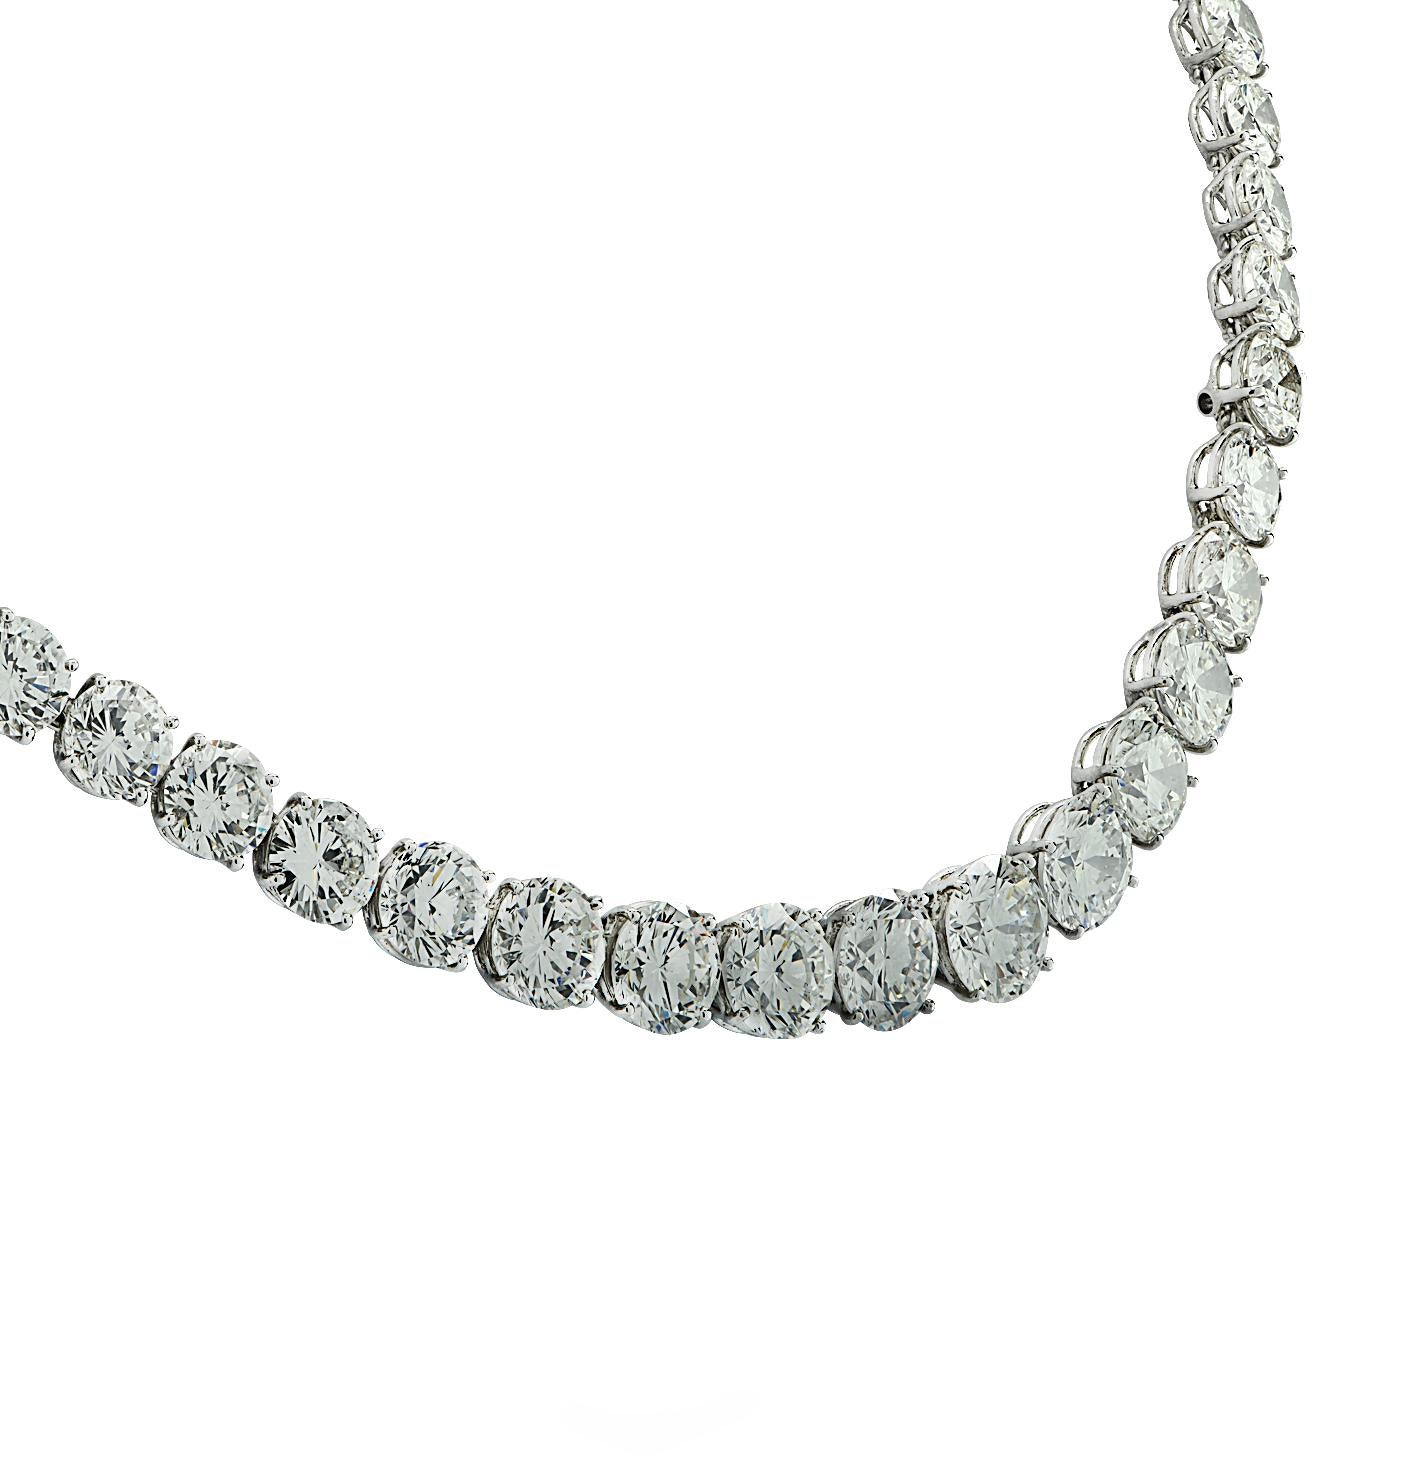 Round Cut Harry Winston GIA Certified 44.54 Carat Diamond Riviere Necklace